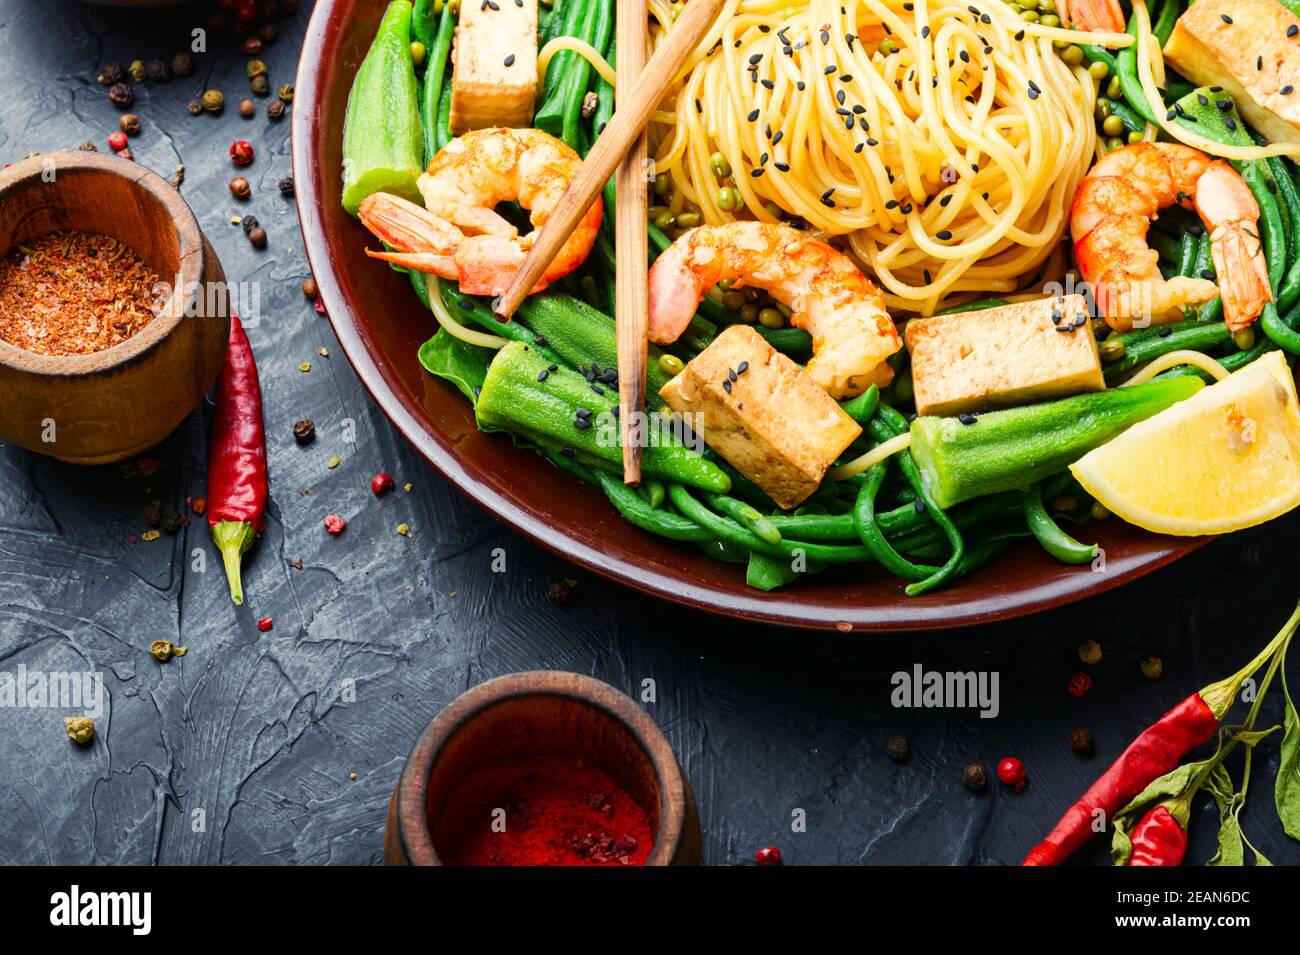 Spaghetti with shrimps Stock Photo